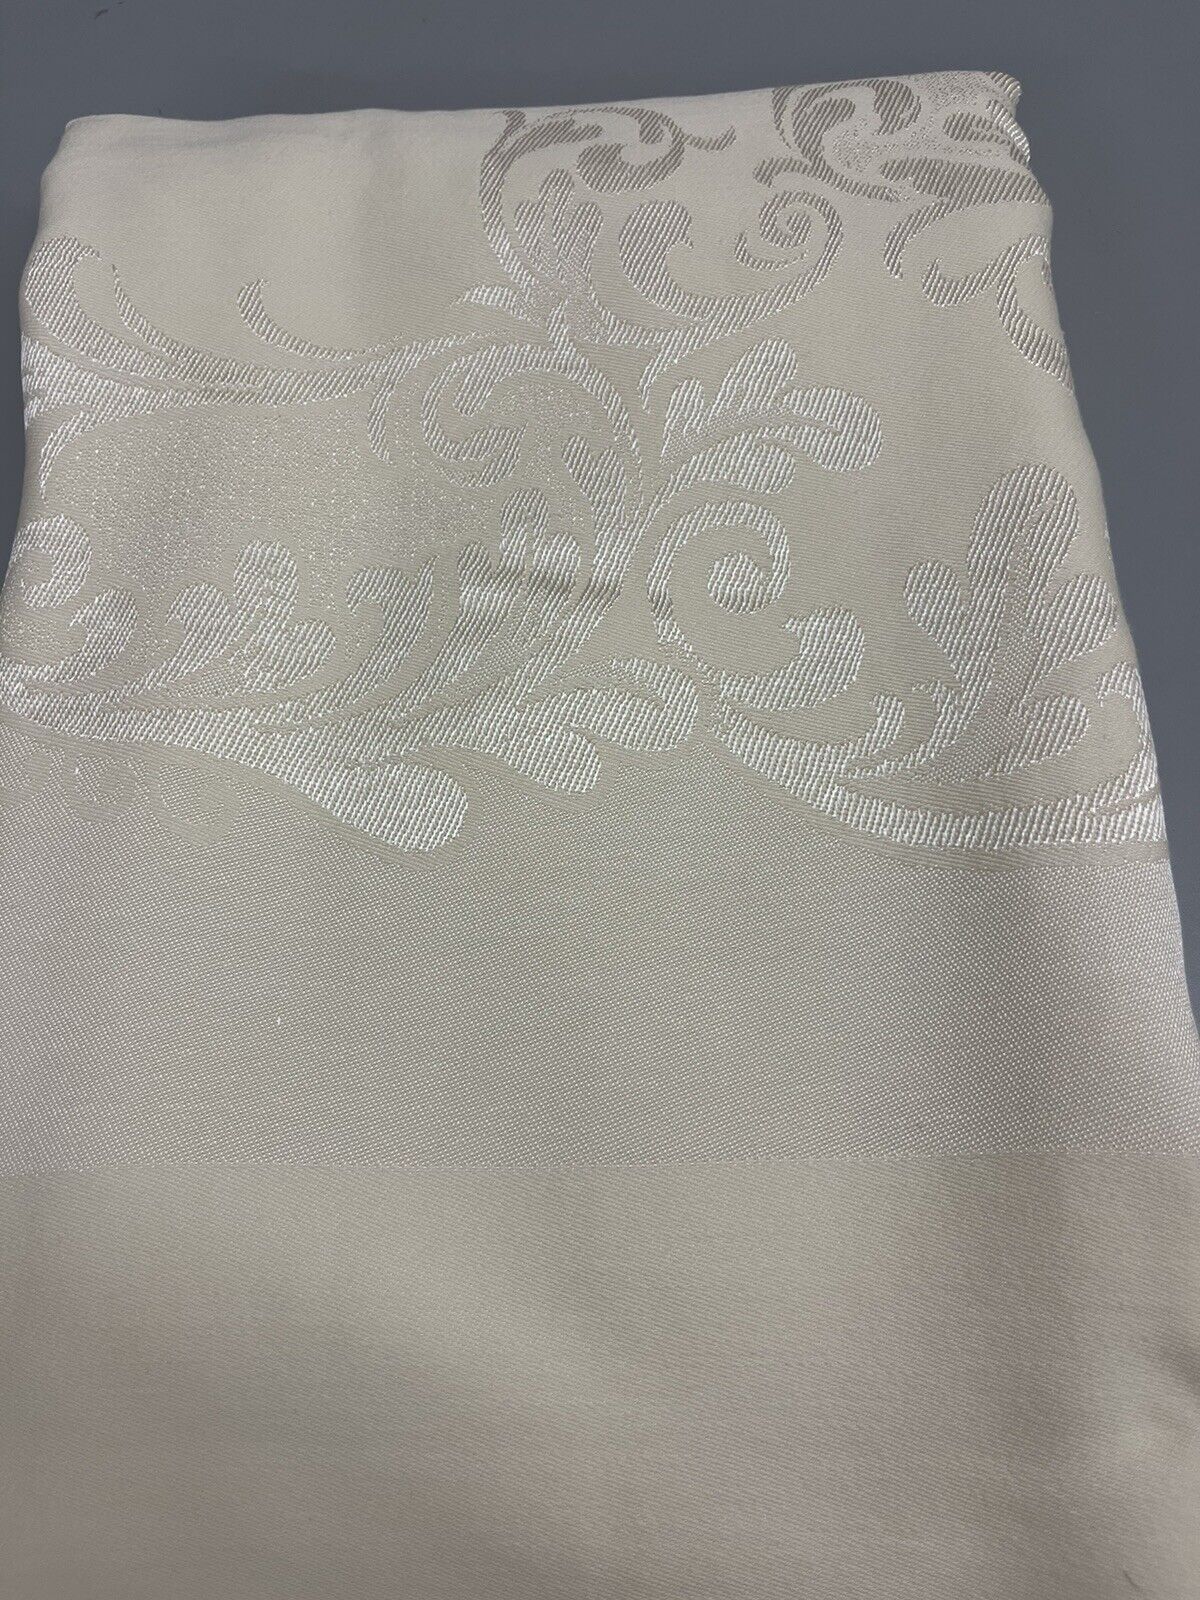 Vintage Linen Damask Tablecloth, scroll design, 60” x 78” Light Yellow